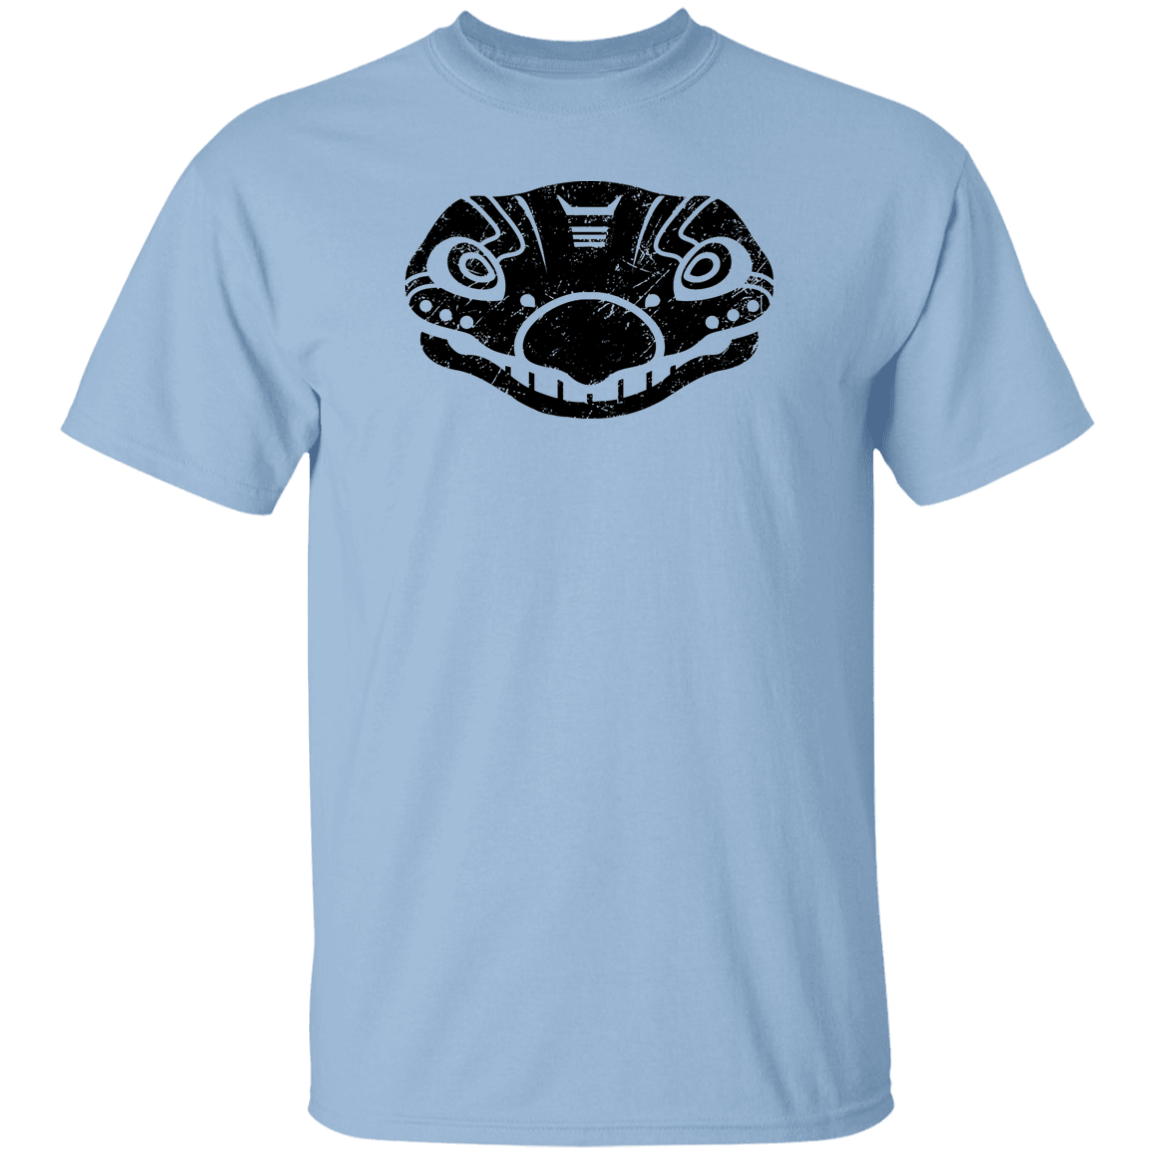 Black Distressed Emblem T-Shirt for Kids (Stegosaurus/Bones)